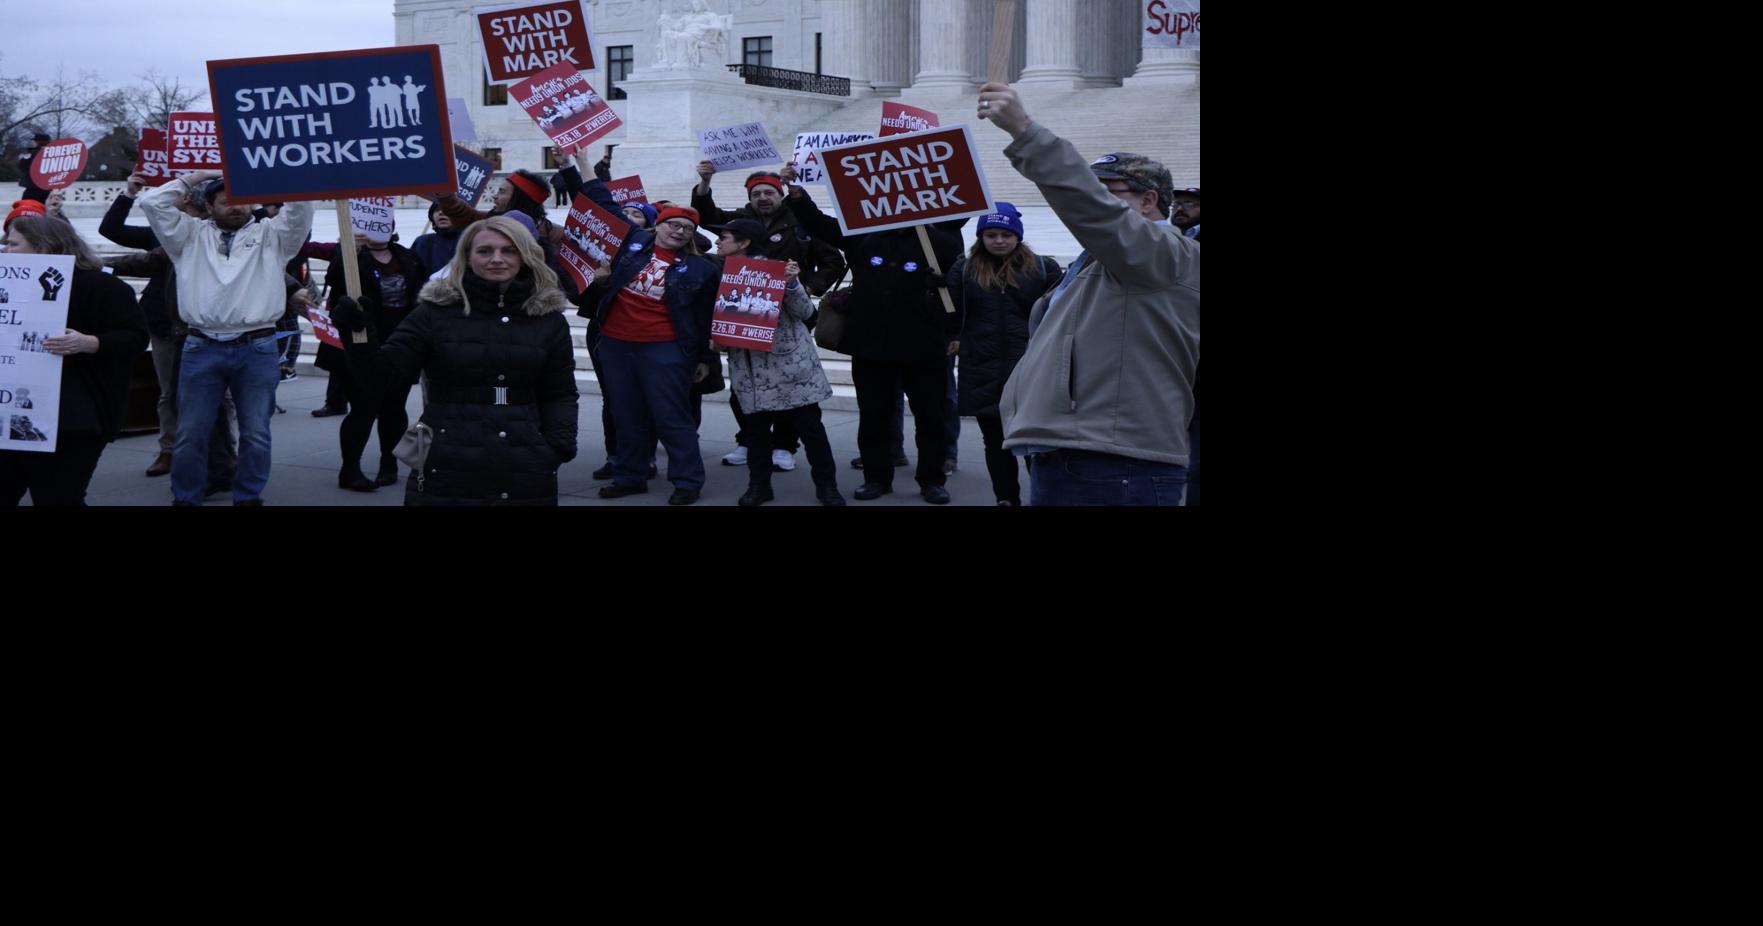 Judge rules fair share fees unconstitutional in Pennsylvania teachers union lawsuit